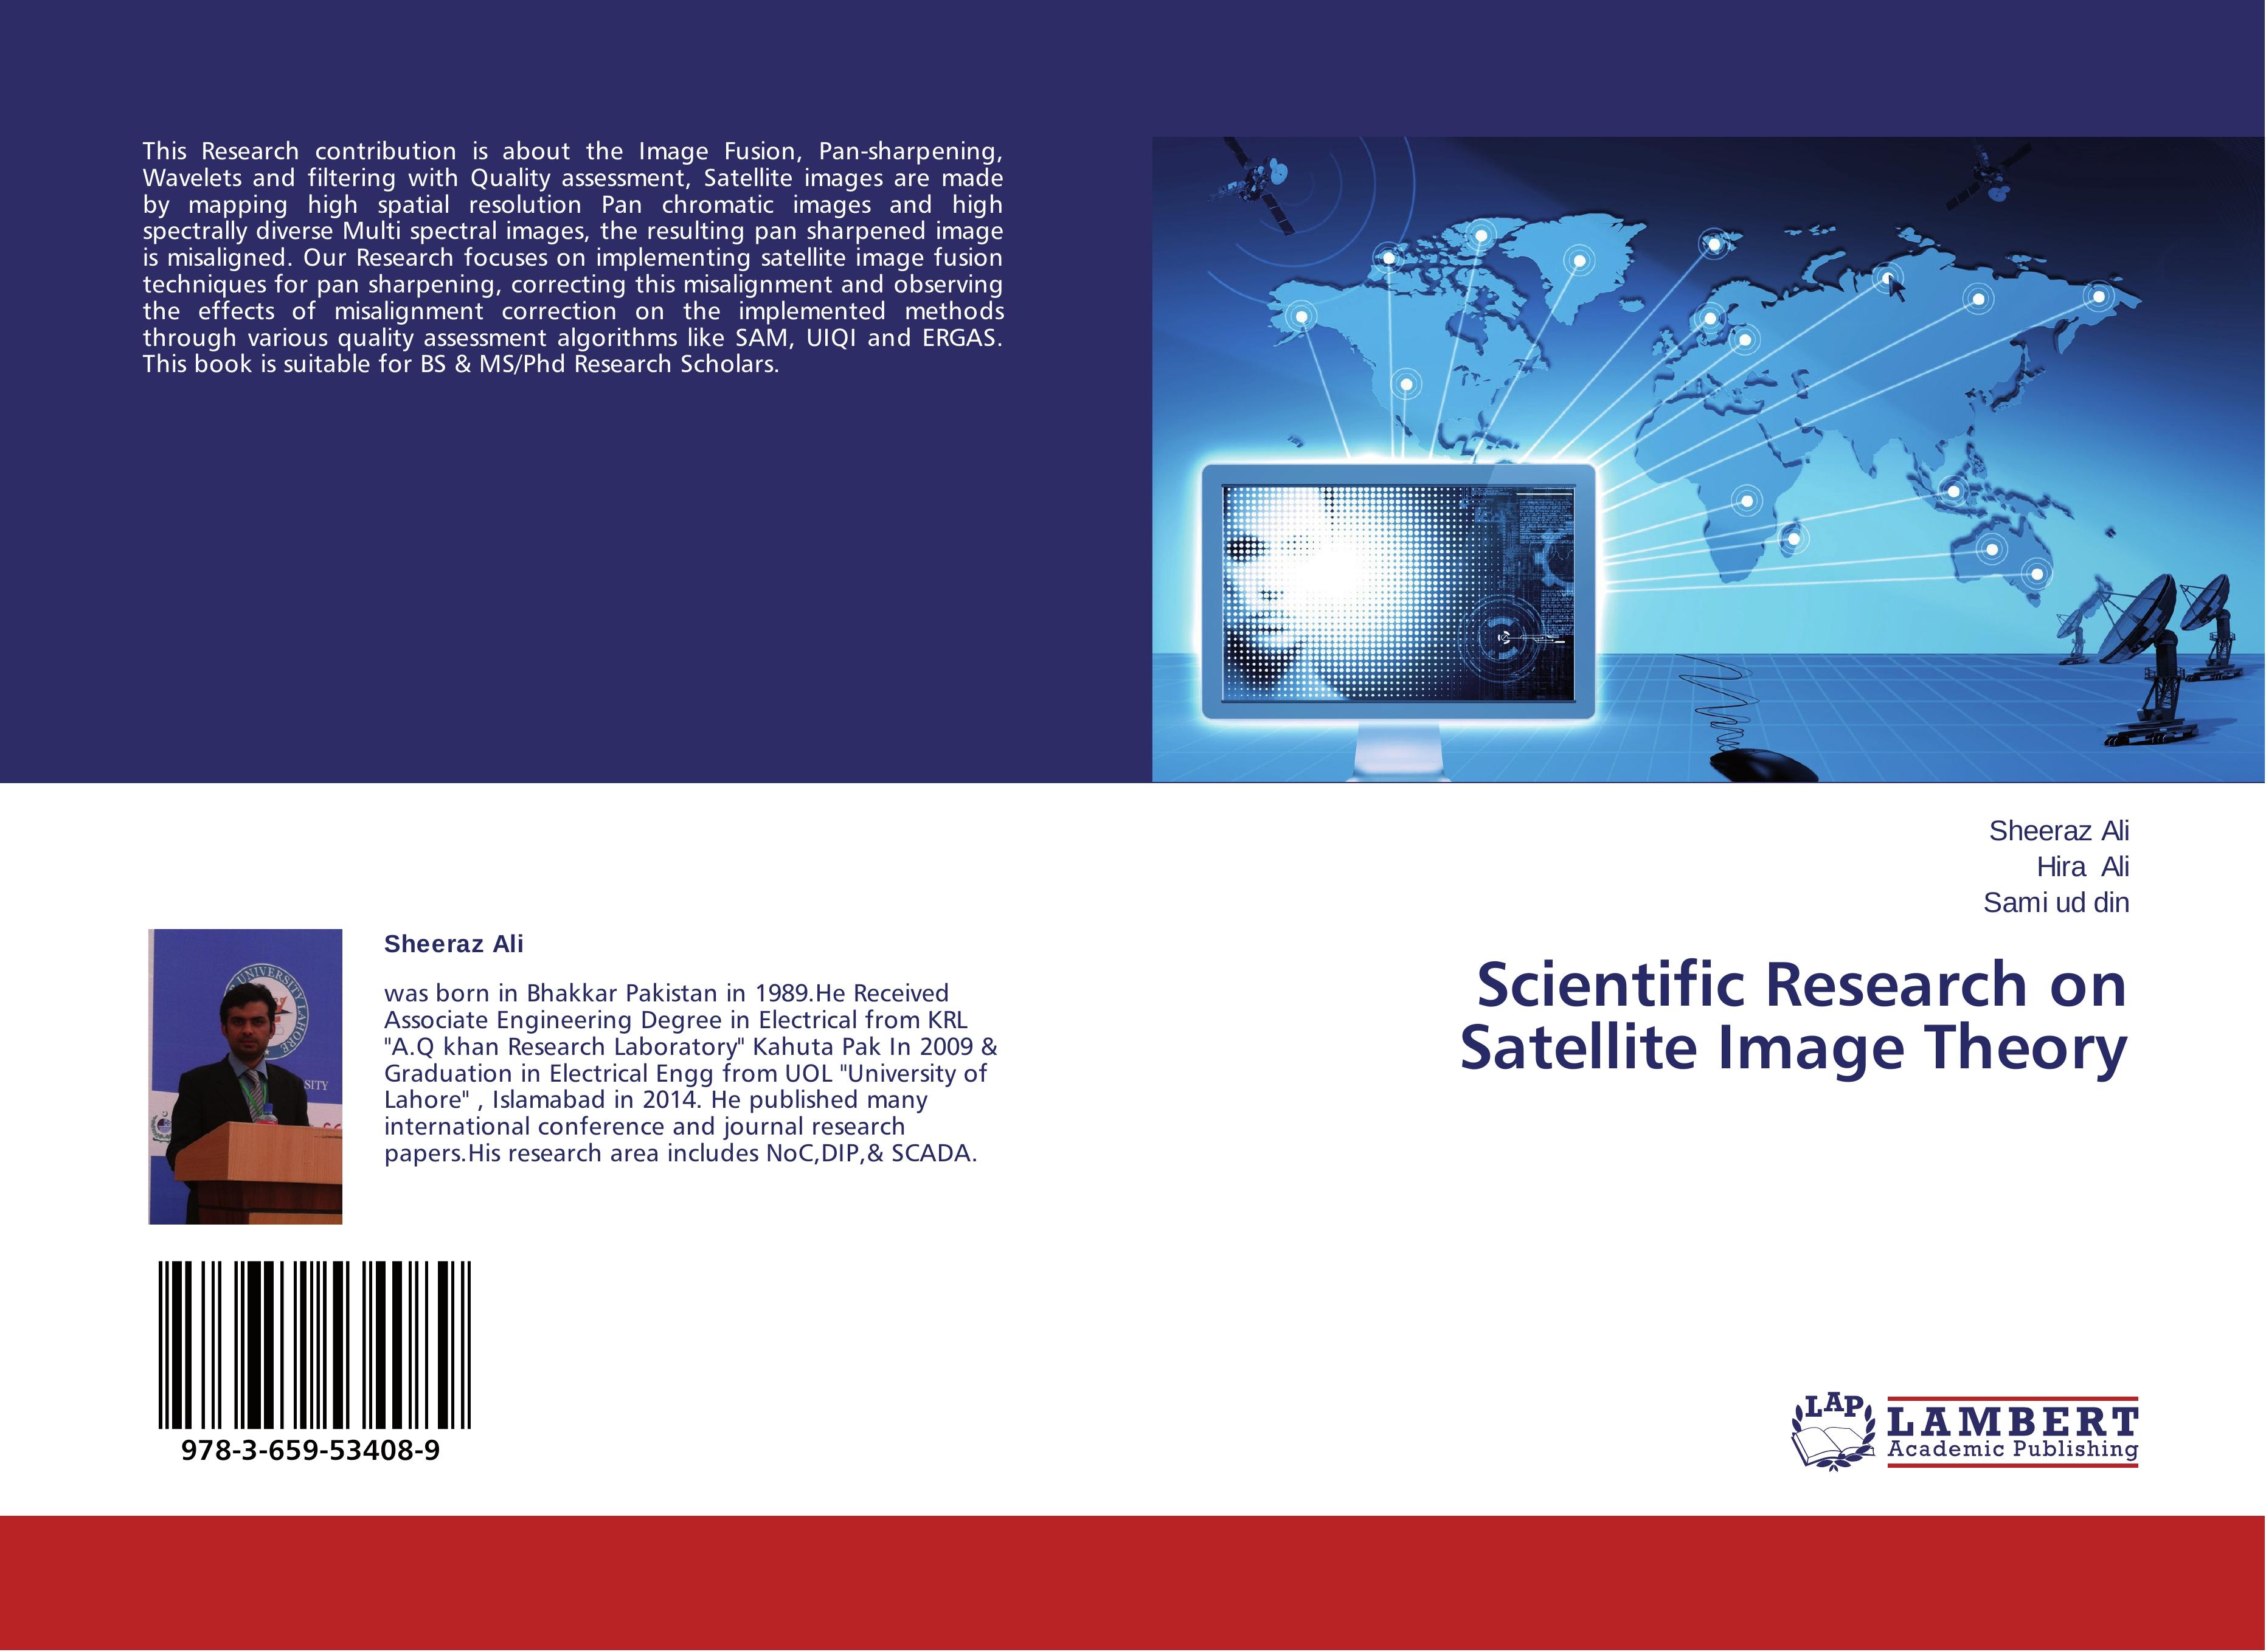 Scientific Research on Satellite Image Theory - Sheeraz Ali Hira Ali Sami ud din